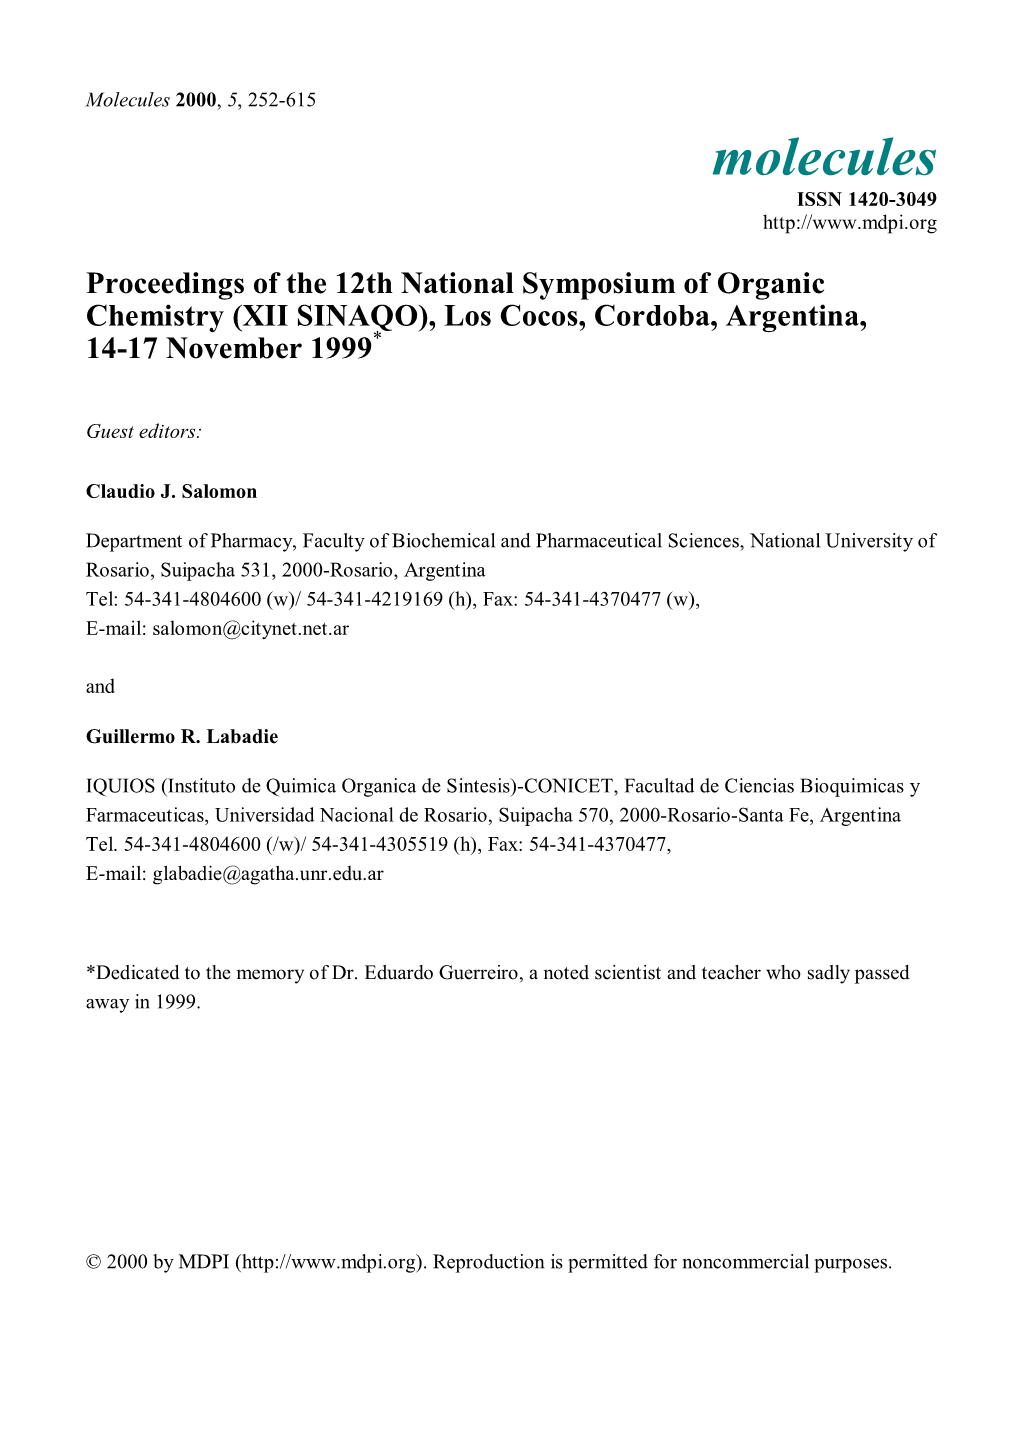 Proceedings of the 12Th National Symposium of Organic Chemistry (XII SINAQO), Los Cocos, Cordoba, Argentina, 14-17 November 1999*